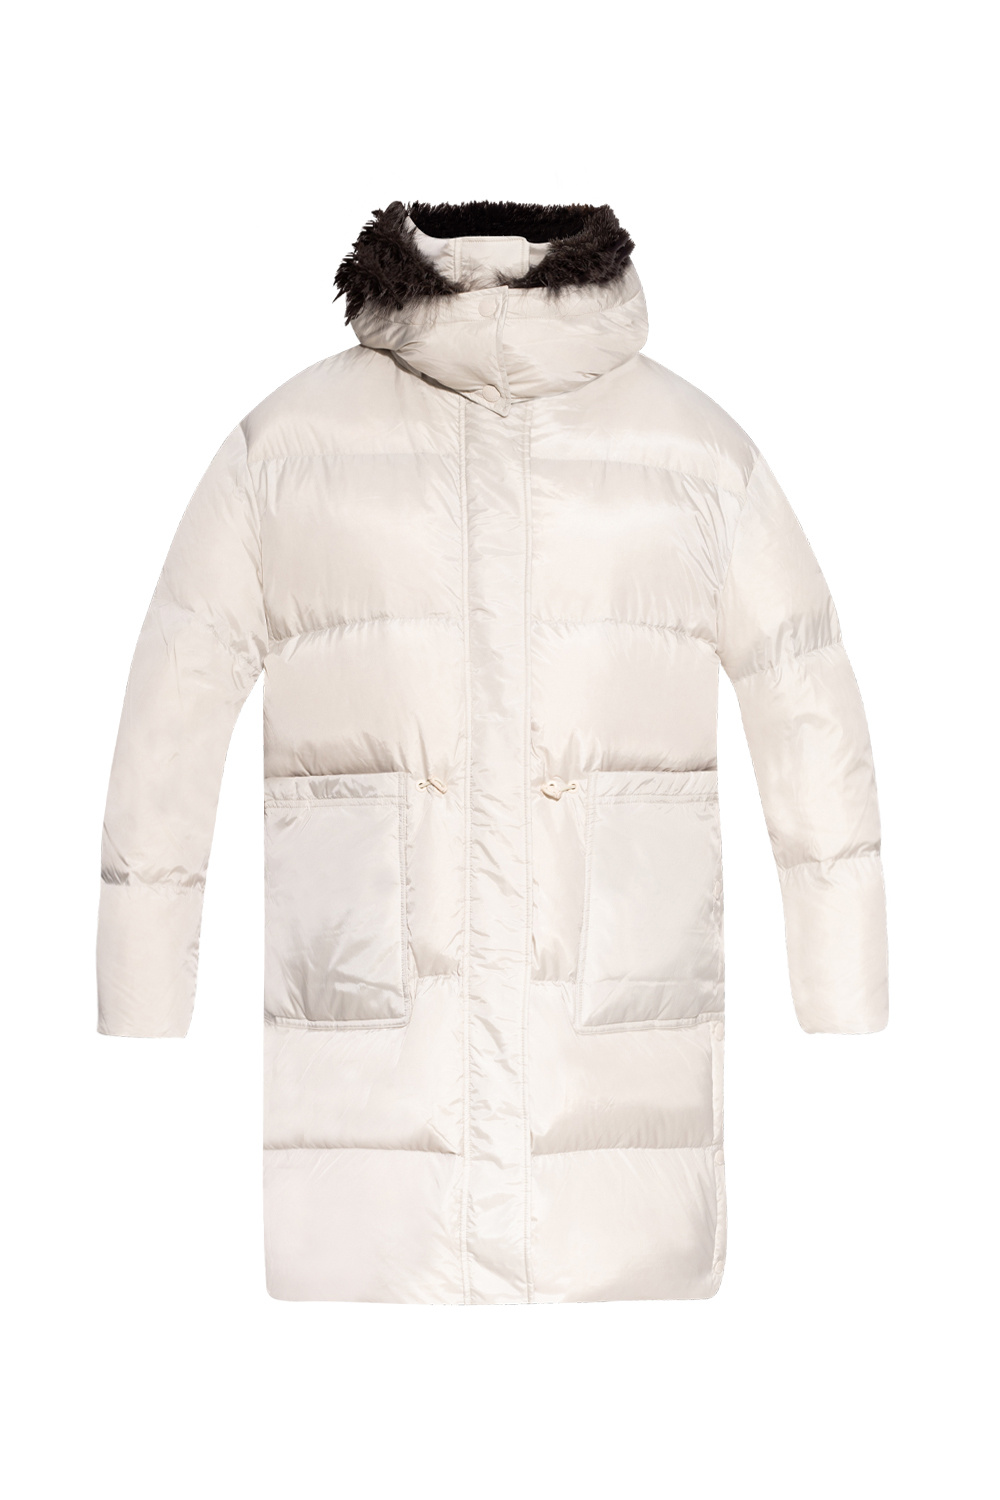 Womens Yves Salomon white Fur-Trim Puffer Jacket with Gloves